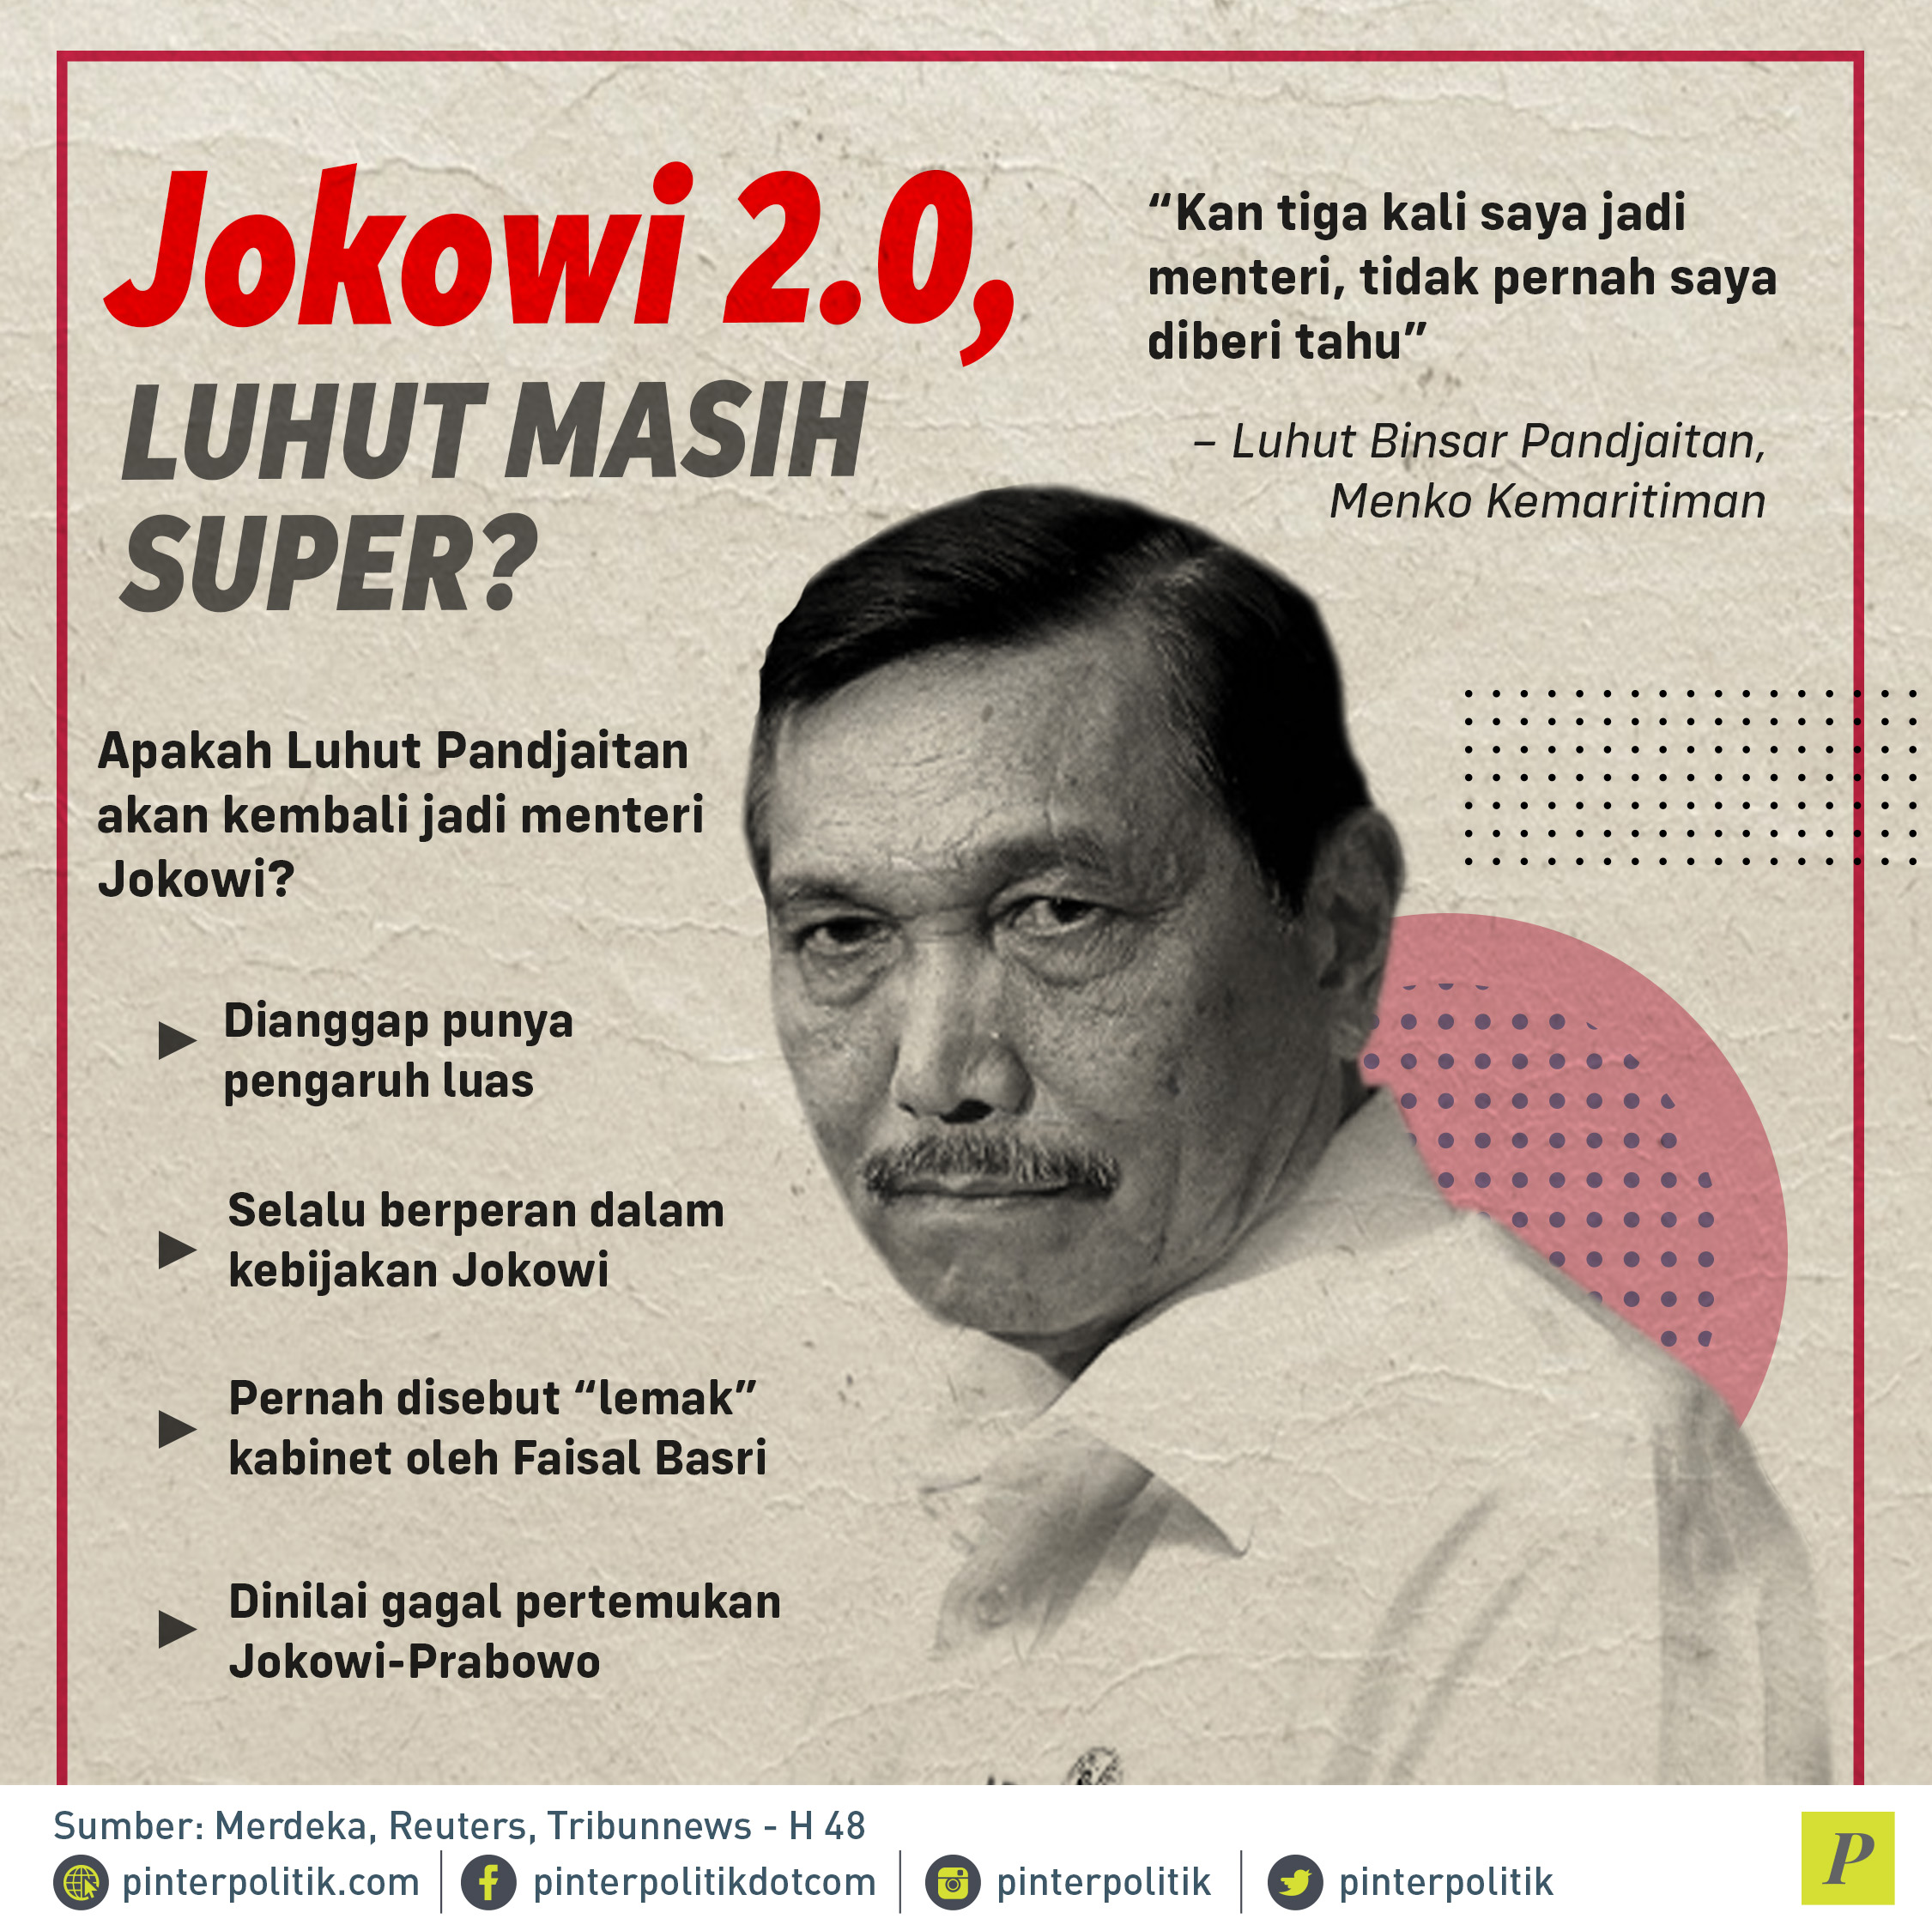 Luhut Pandjaitan akan kembali jadi menteri Jokowi